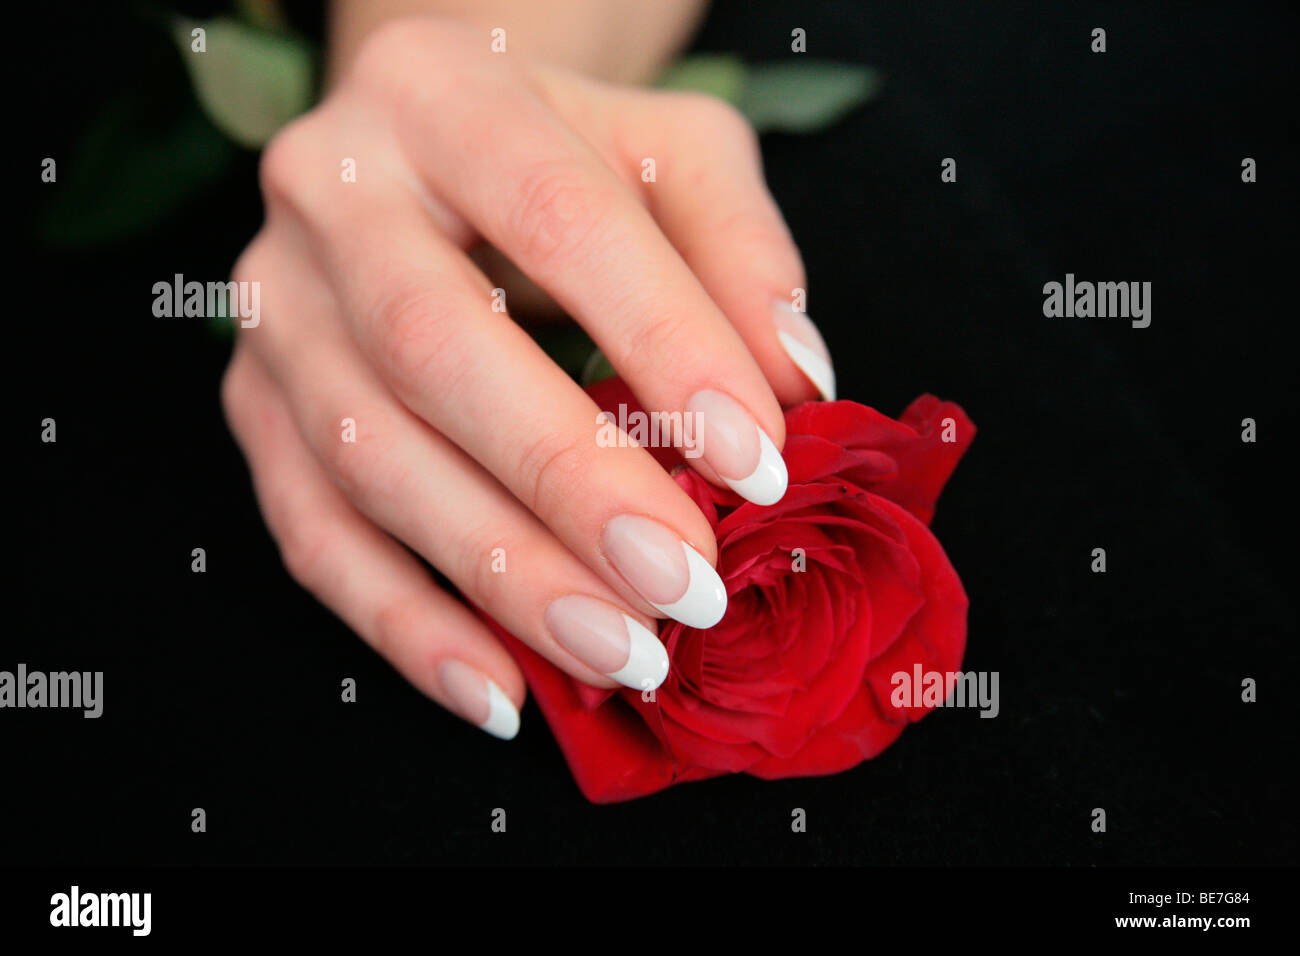 Finger nail art Stock Photo